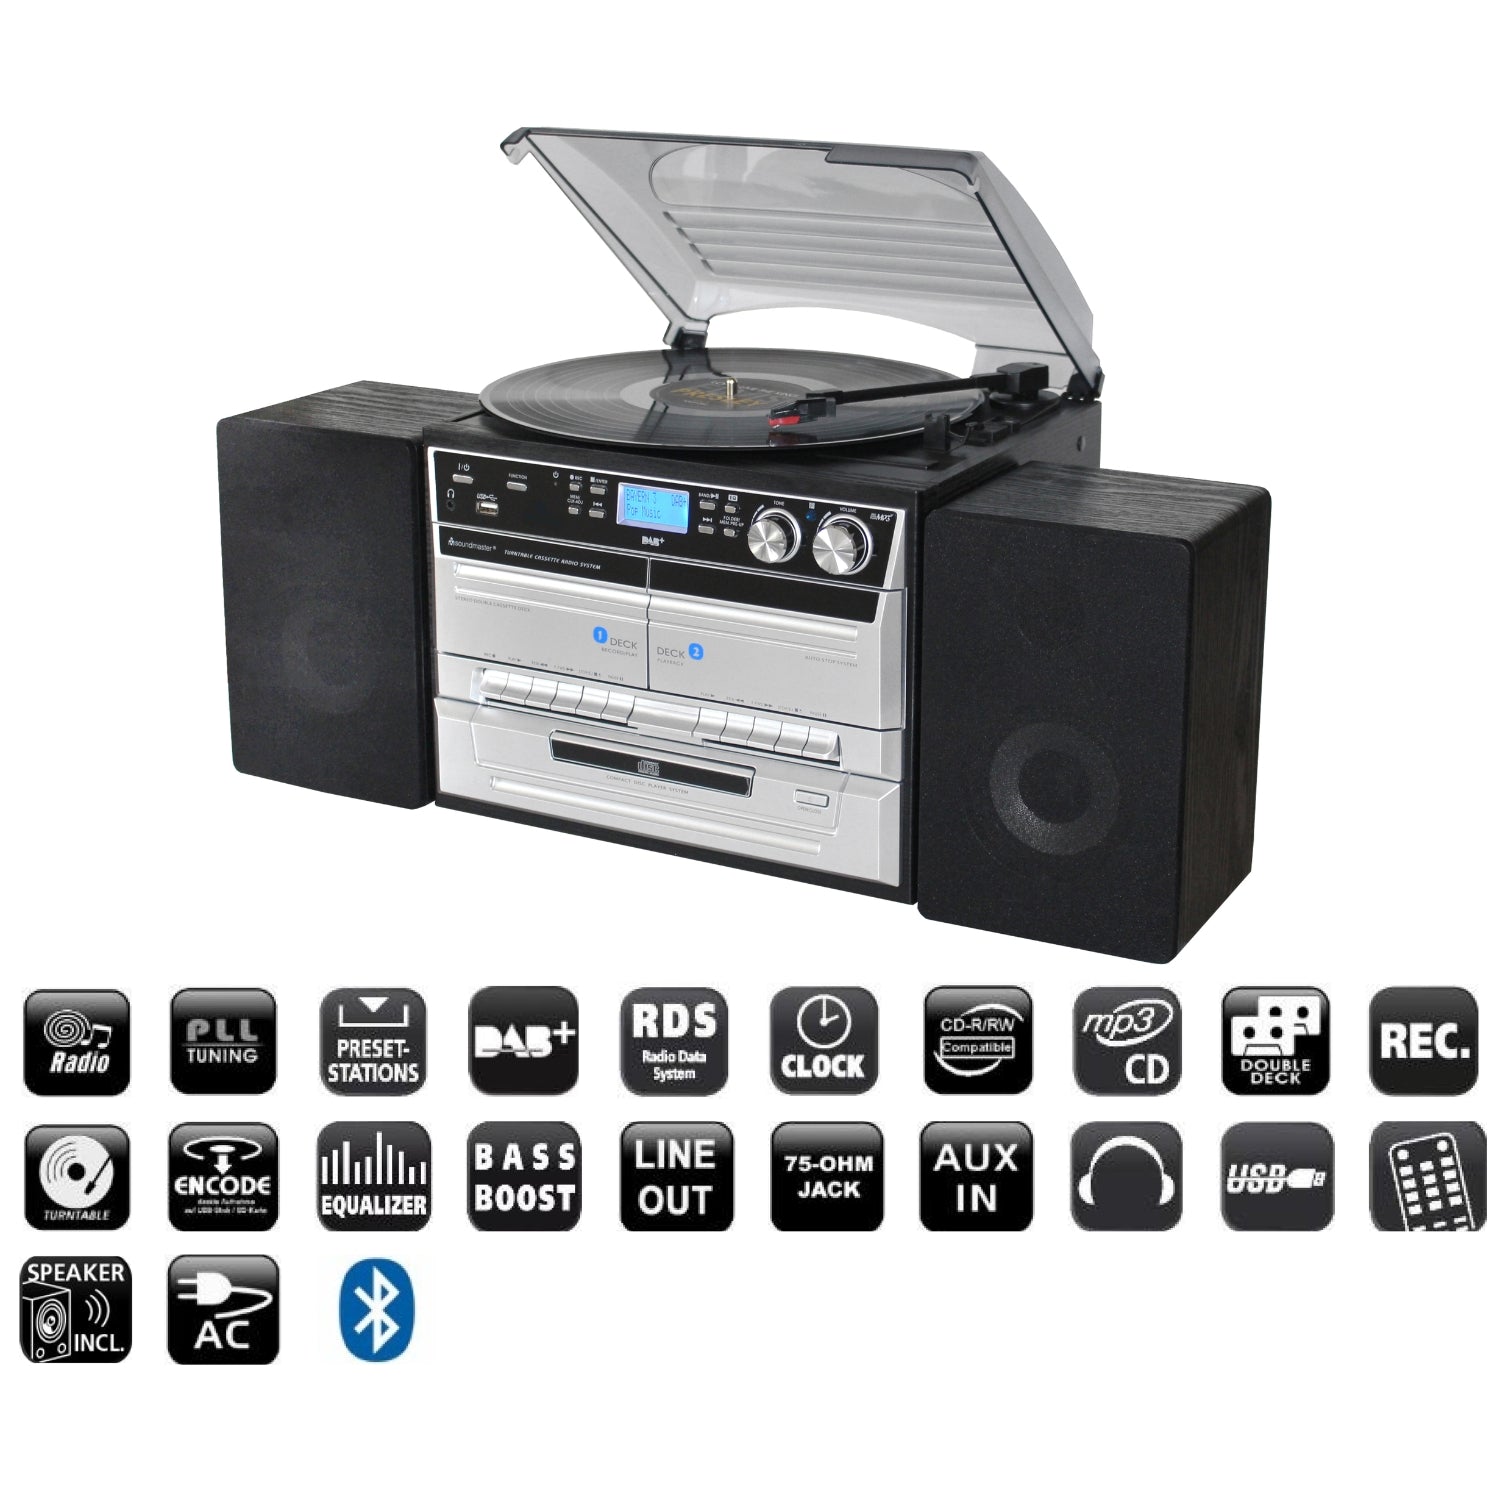 B-ITEM Soundmaster MCD5550SW stereo system DAB+ double cassette Bluetooth CD MP3 turntable USB encoding digitization